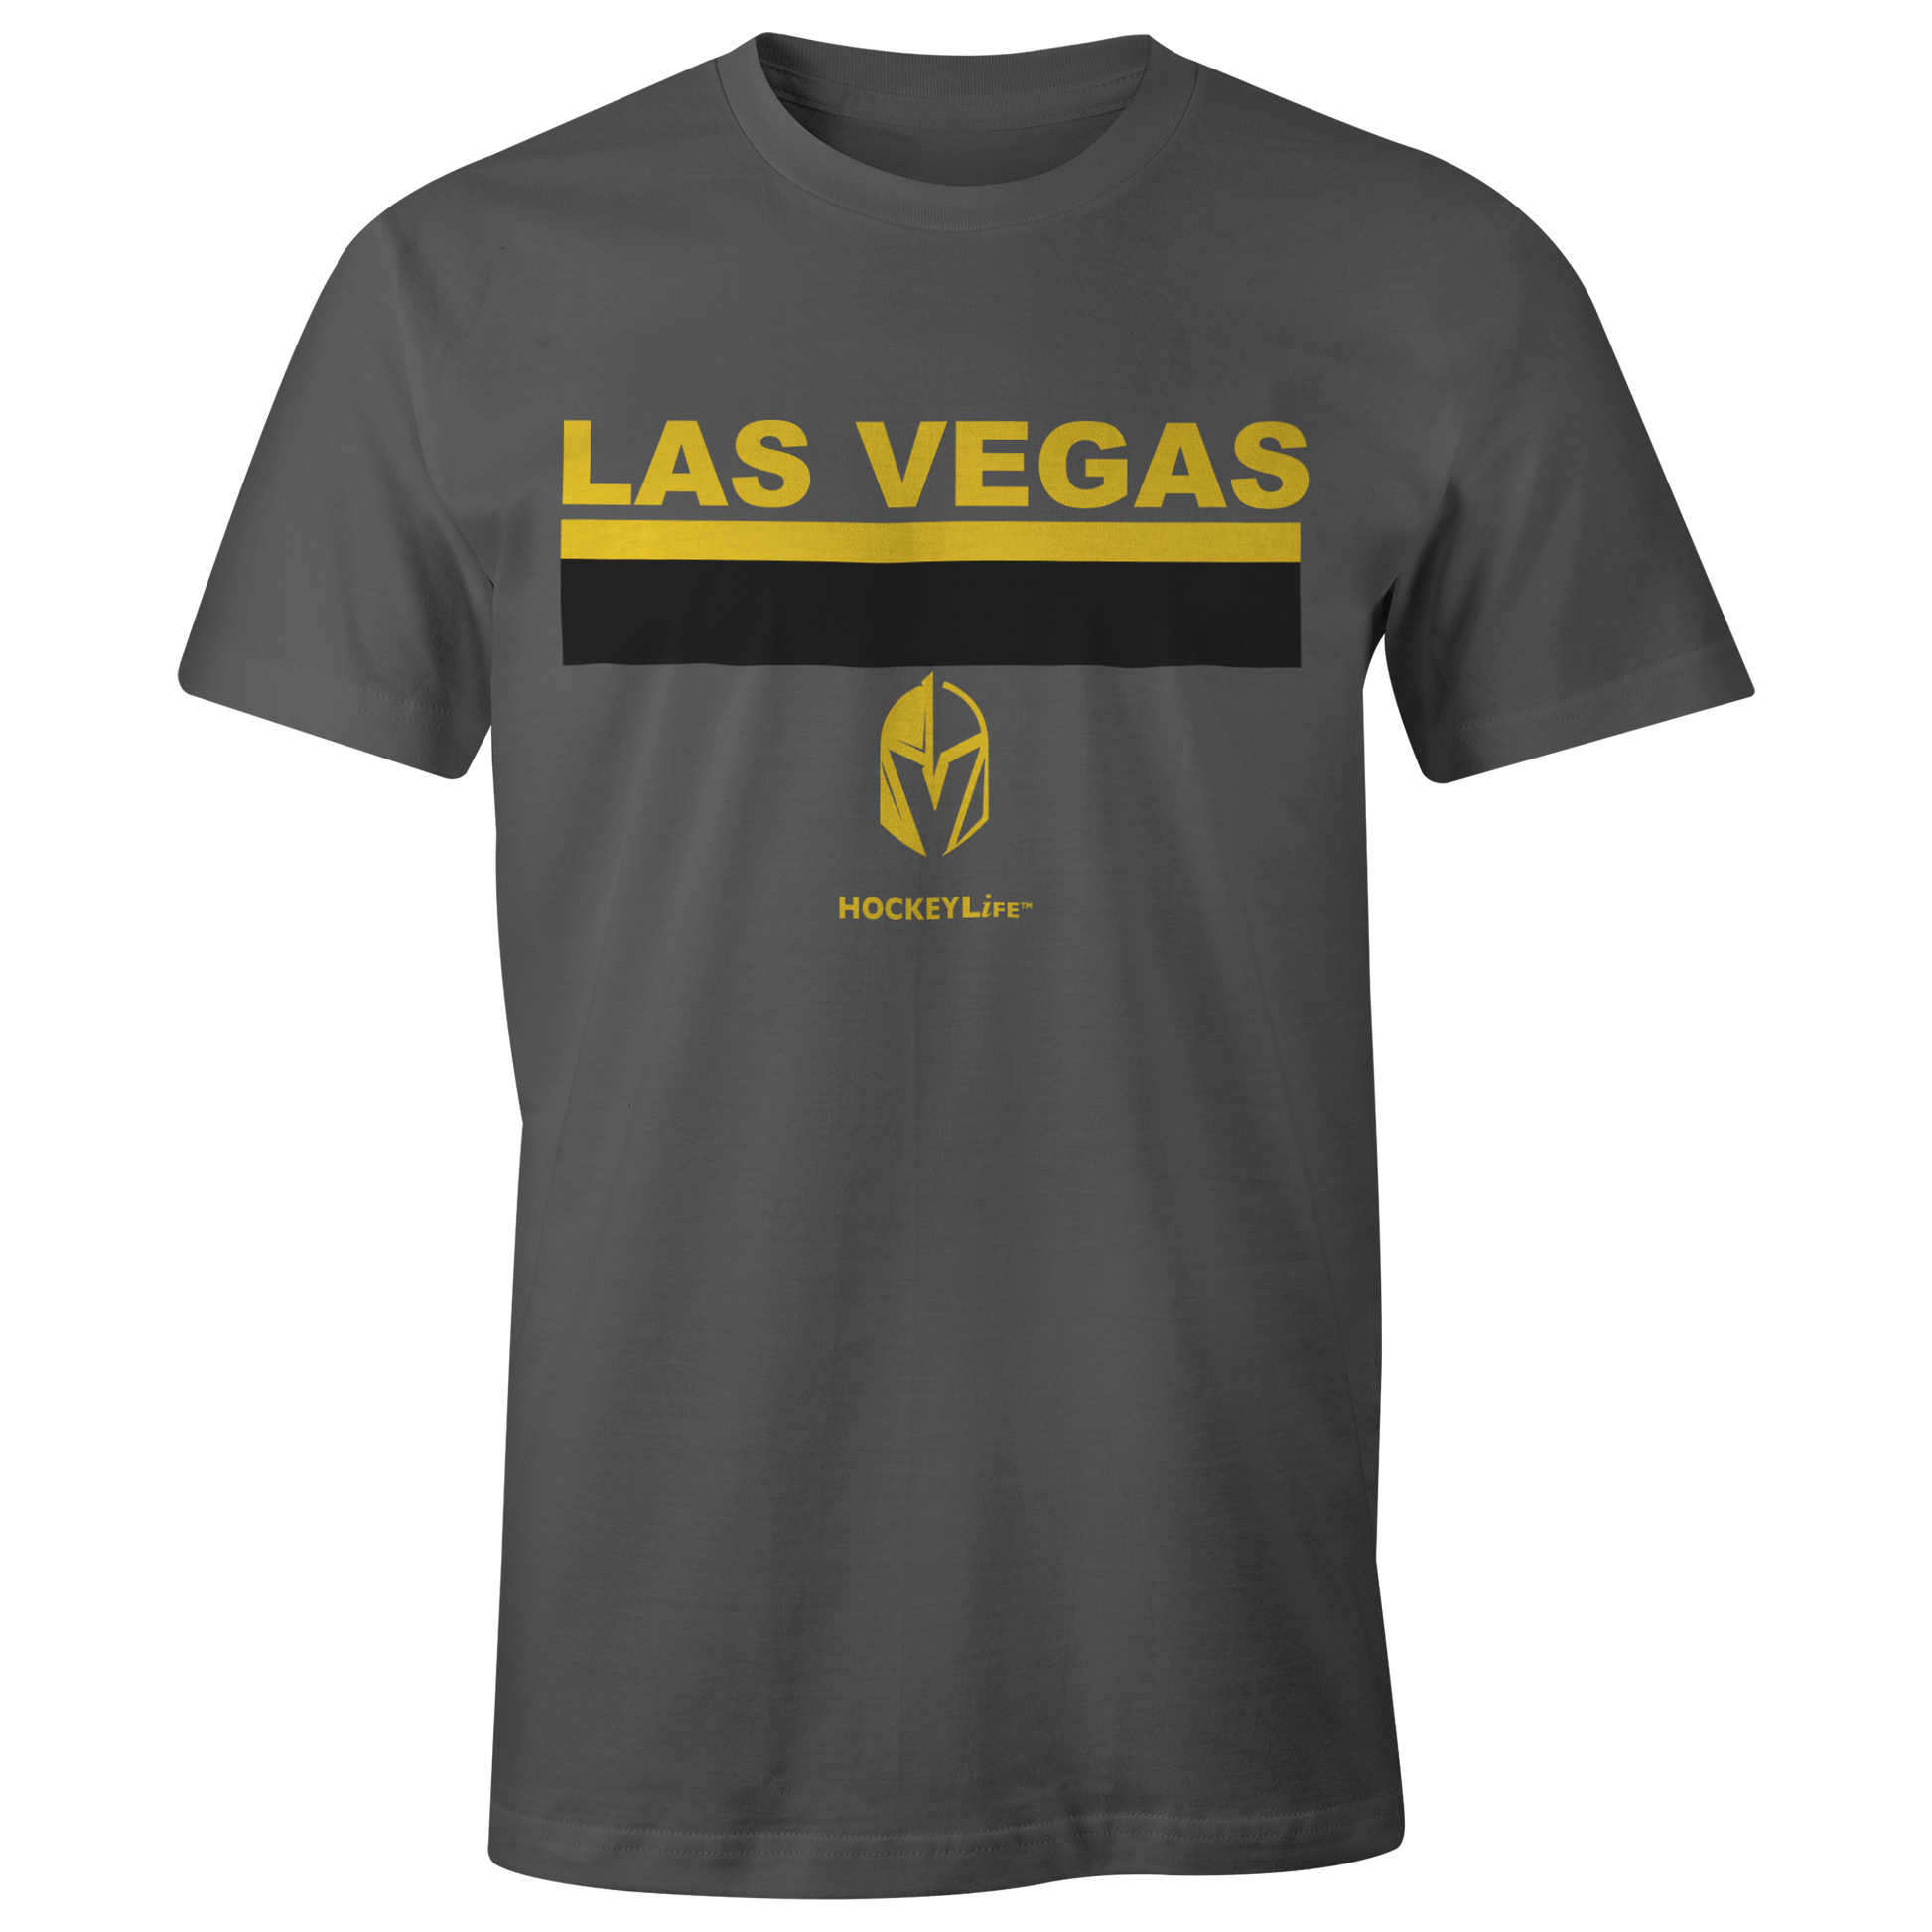 Golden Knights Gear, Las Vegas fashion